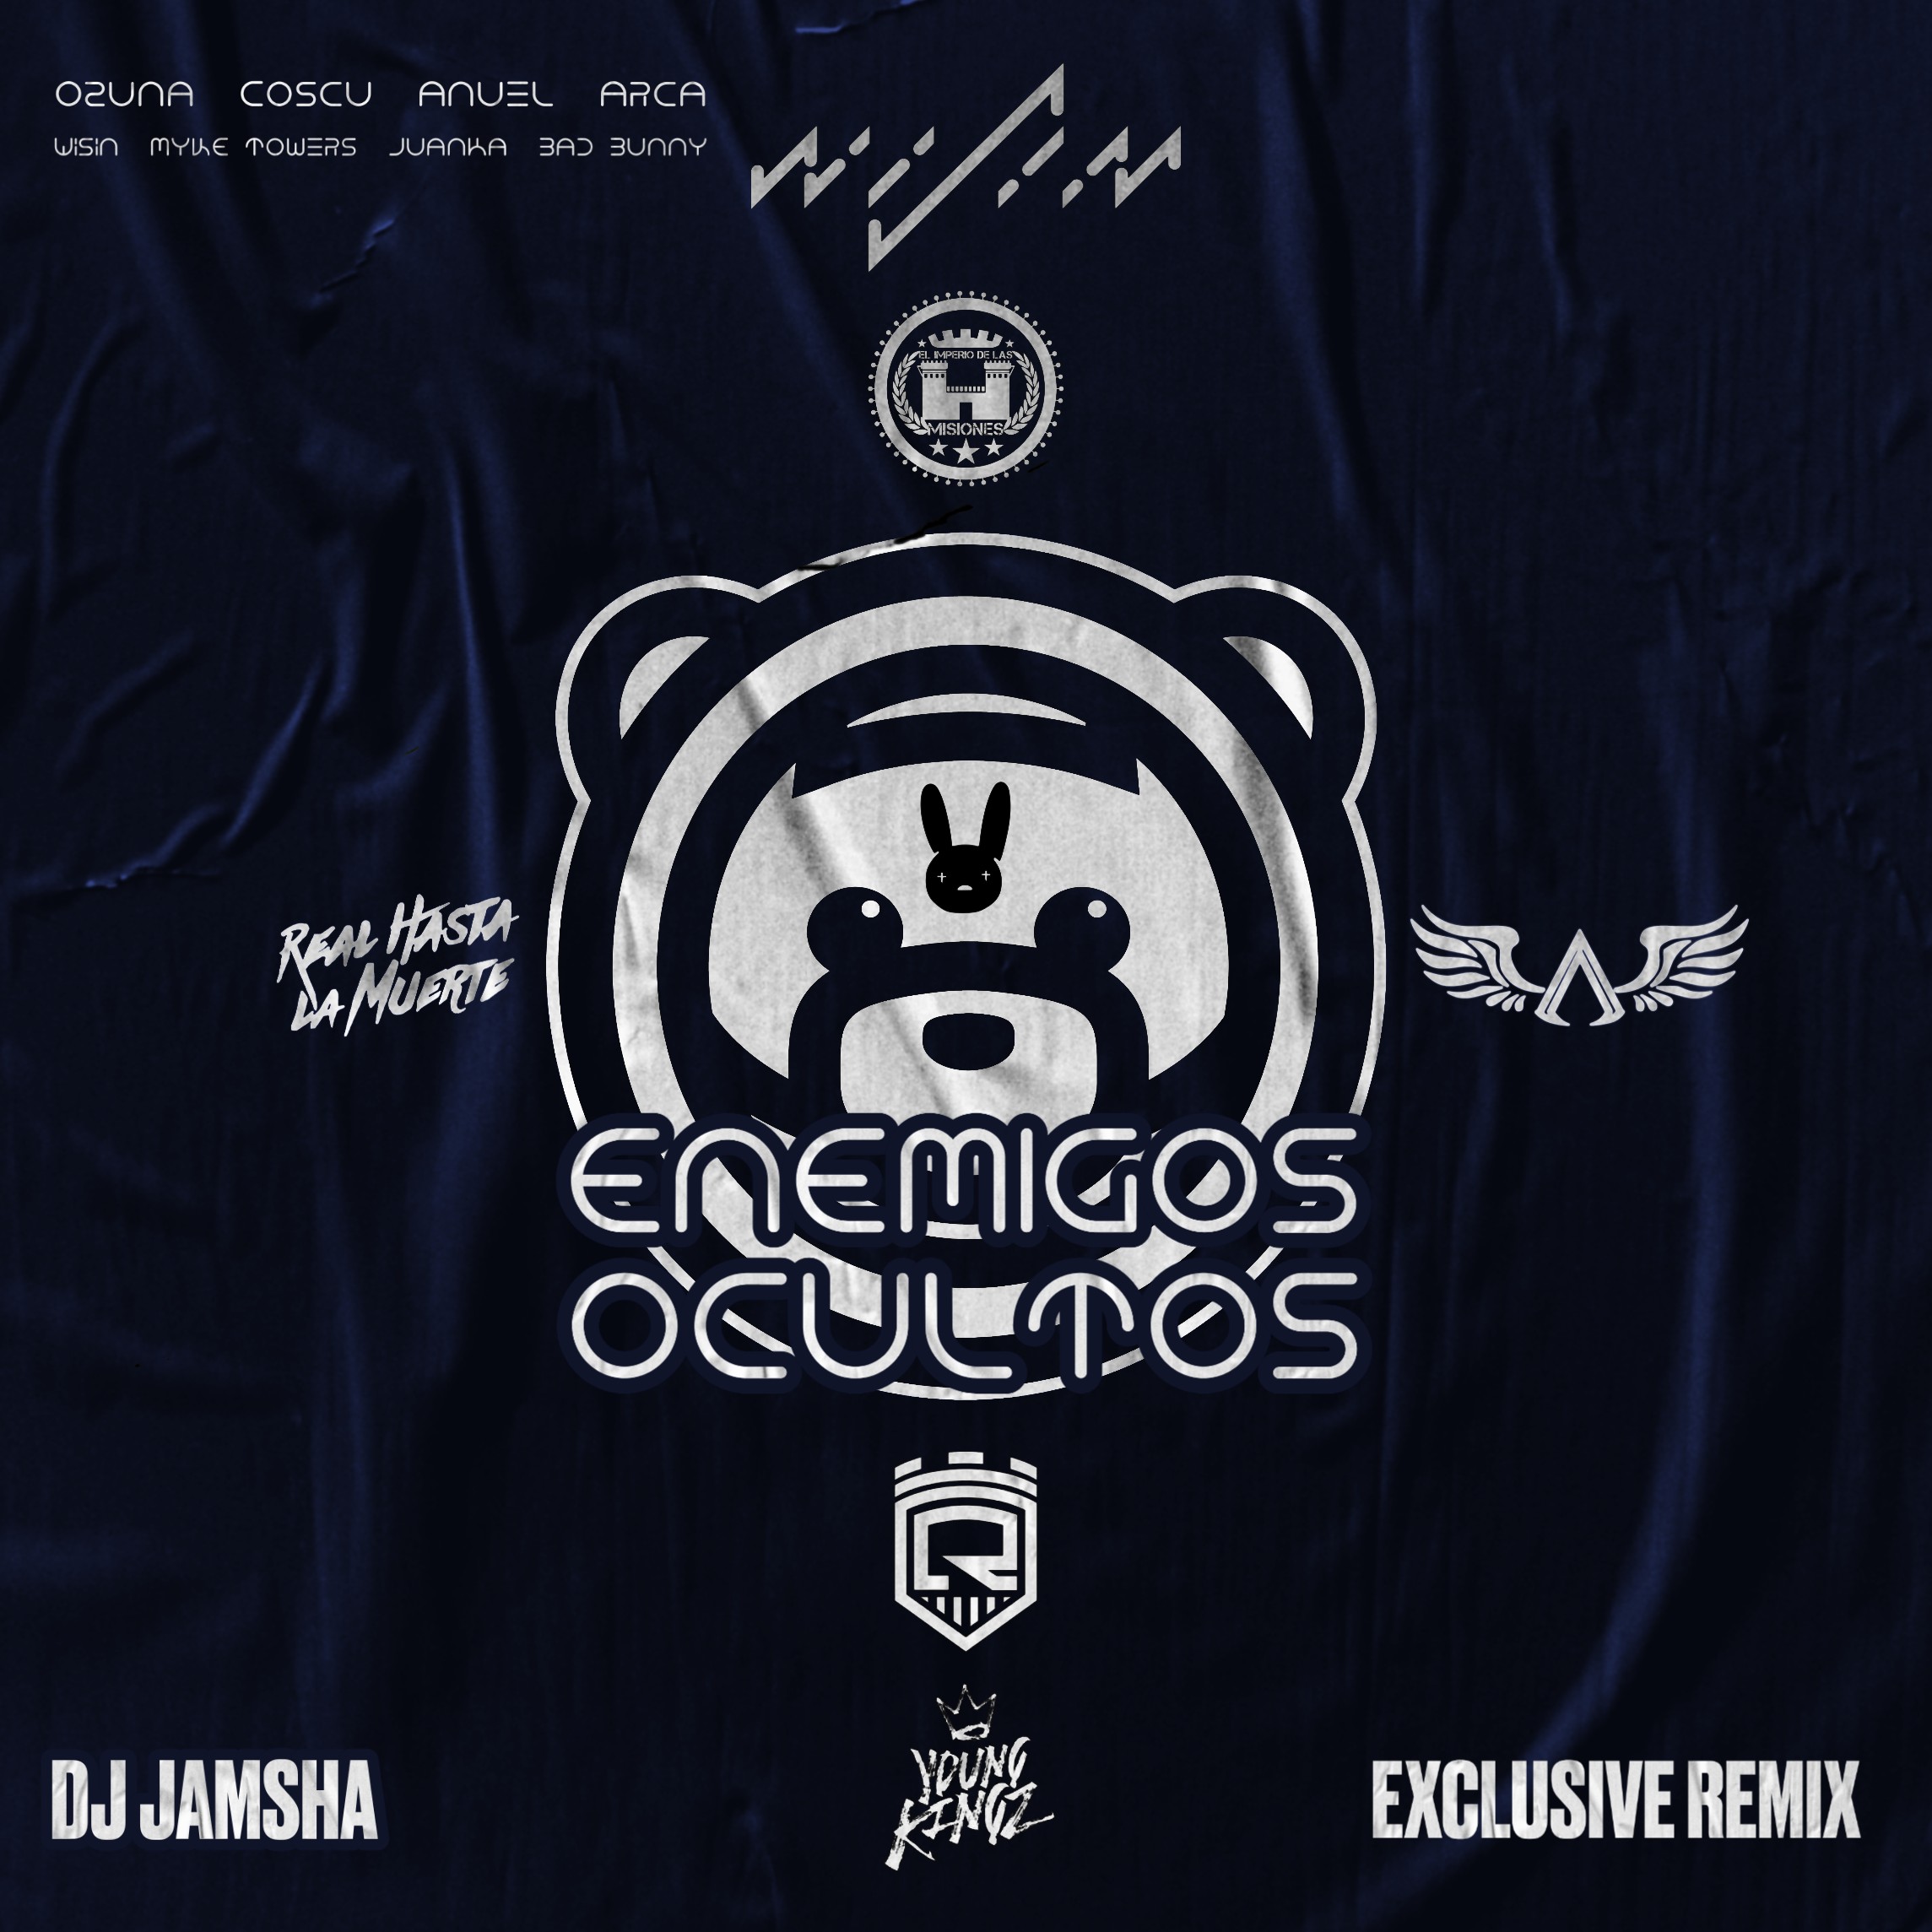 Enemigos Ocutos (Dj Jamsha Exclusive Remix).mp3